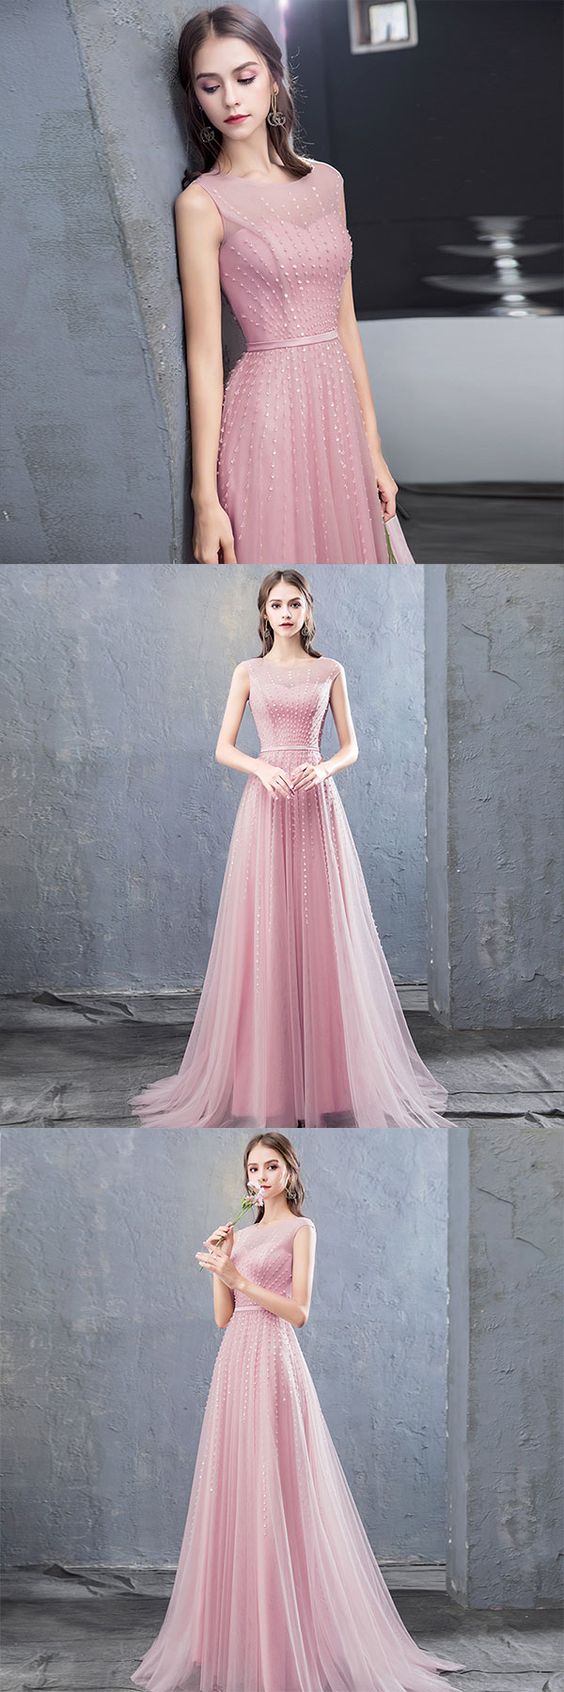 Stylish Round Neck Tulle Beaded Long Prom Dress, Evening Dress M7137